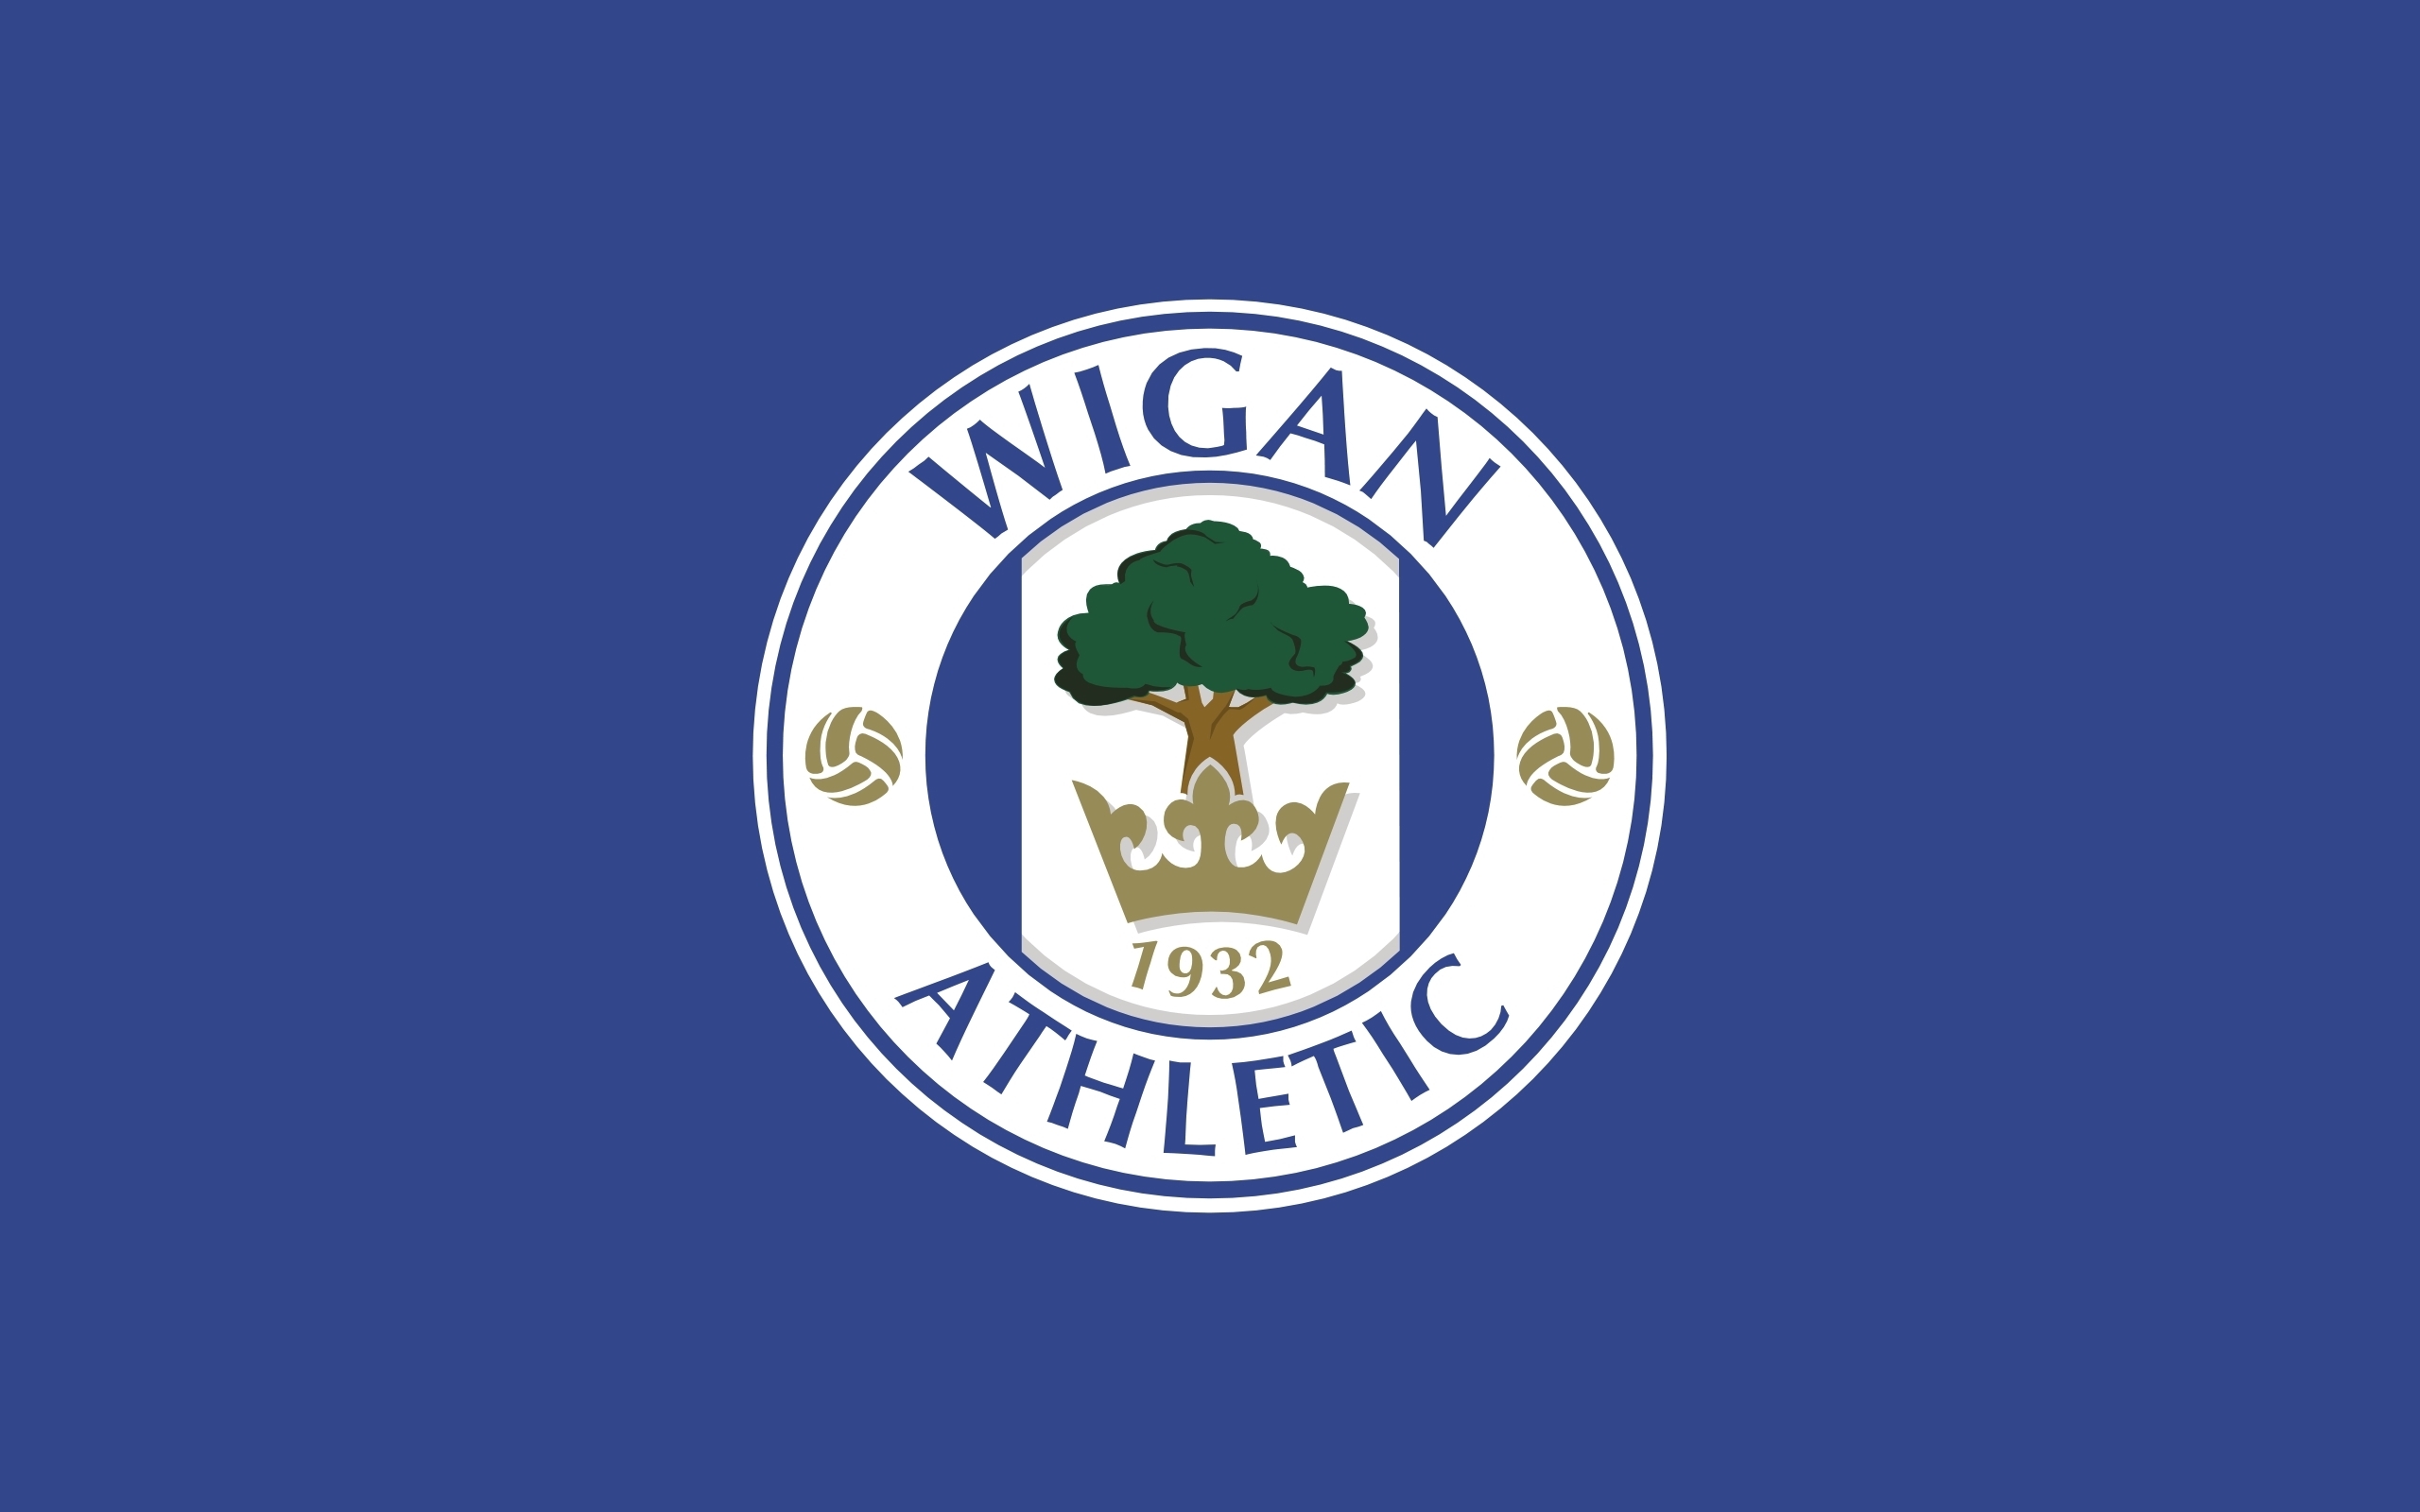 Wigan Athletic Primary logo v2 t shirt iron on transfers